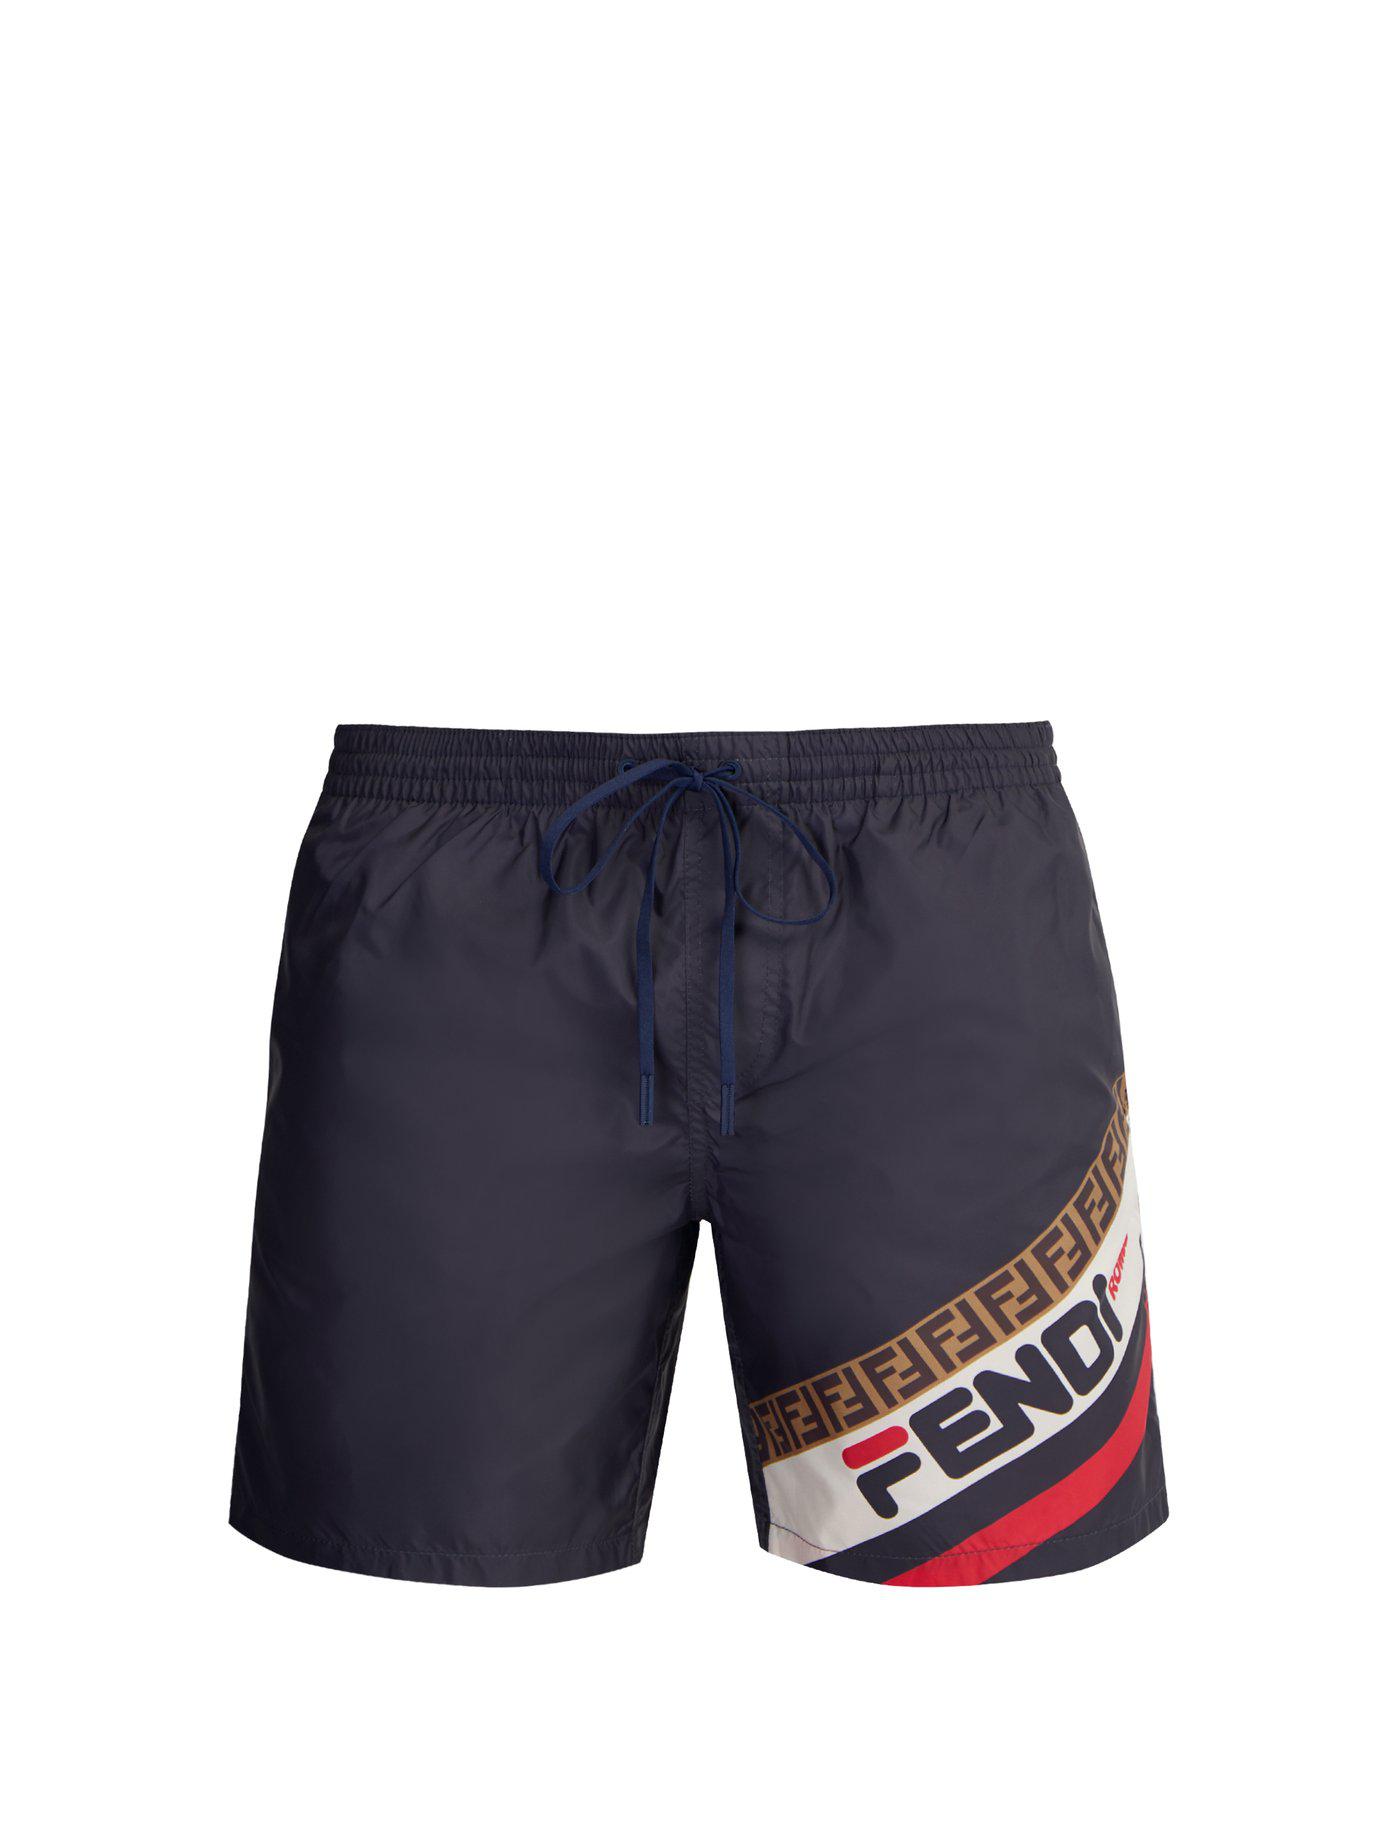 Fendi Fila Logo Swim Shorts in Dark 